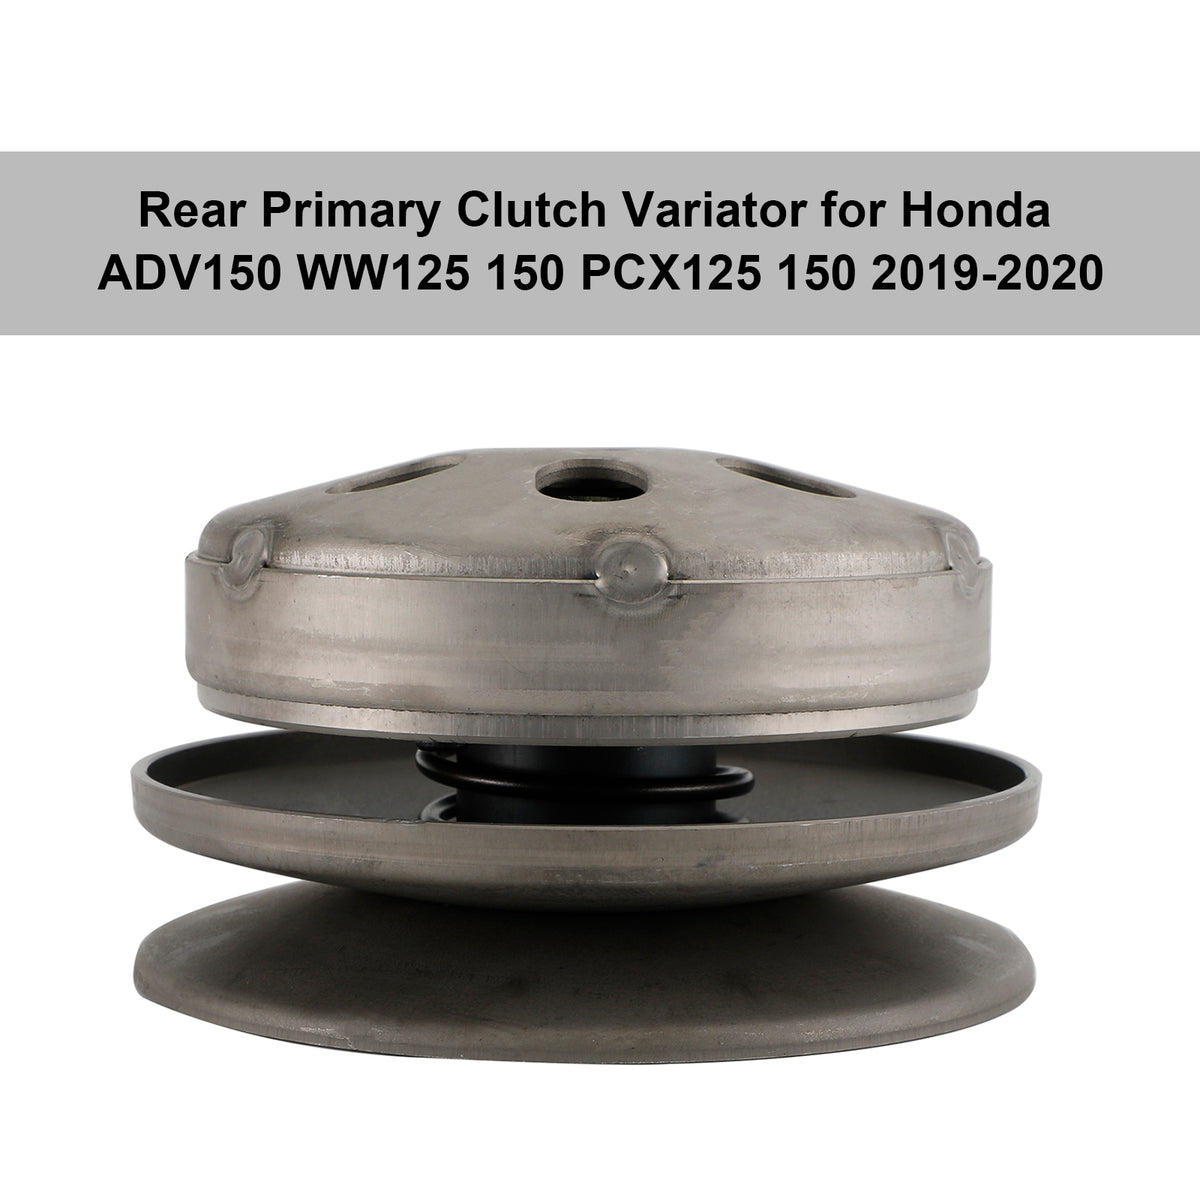 Rear Clutch Variator Primary For Honda Adv150 Ww125 150 Pcx125 150 2019-202 Generic FedEx Express Shipping